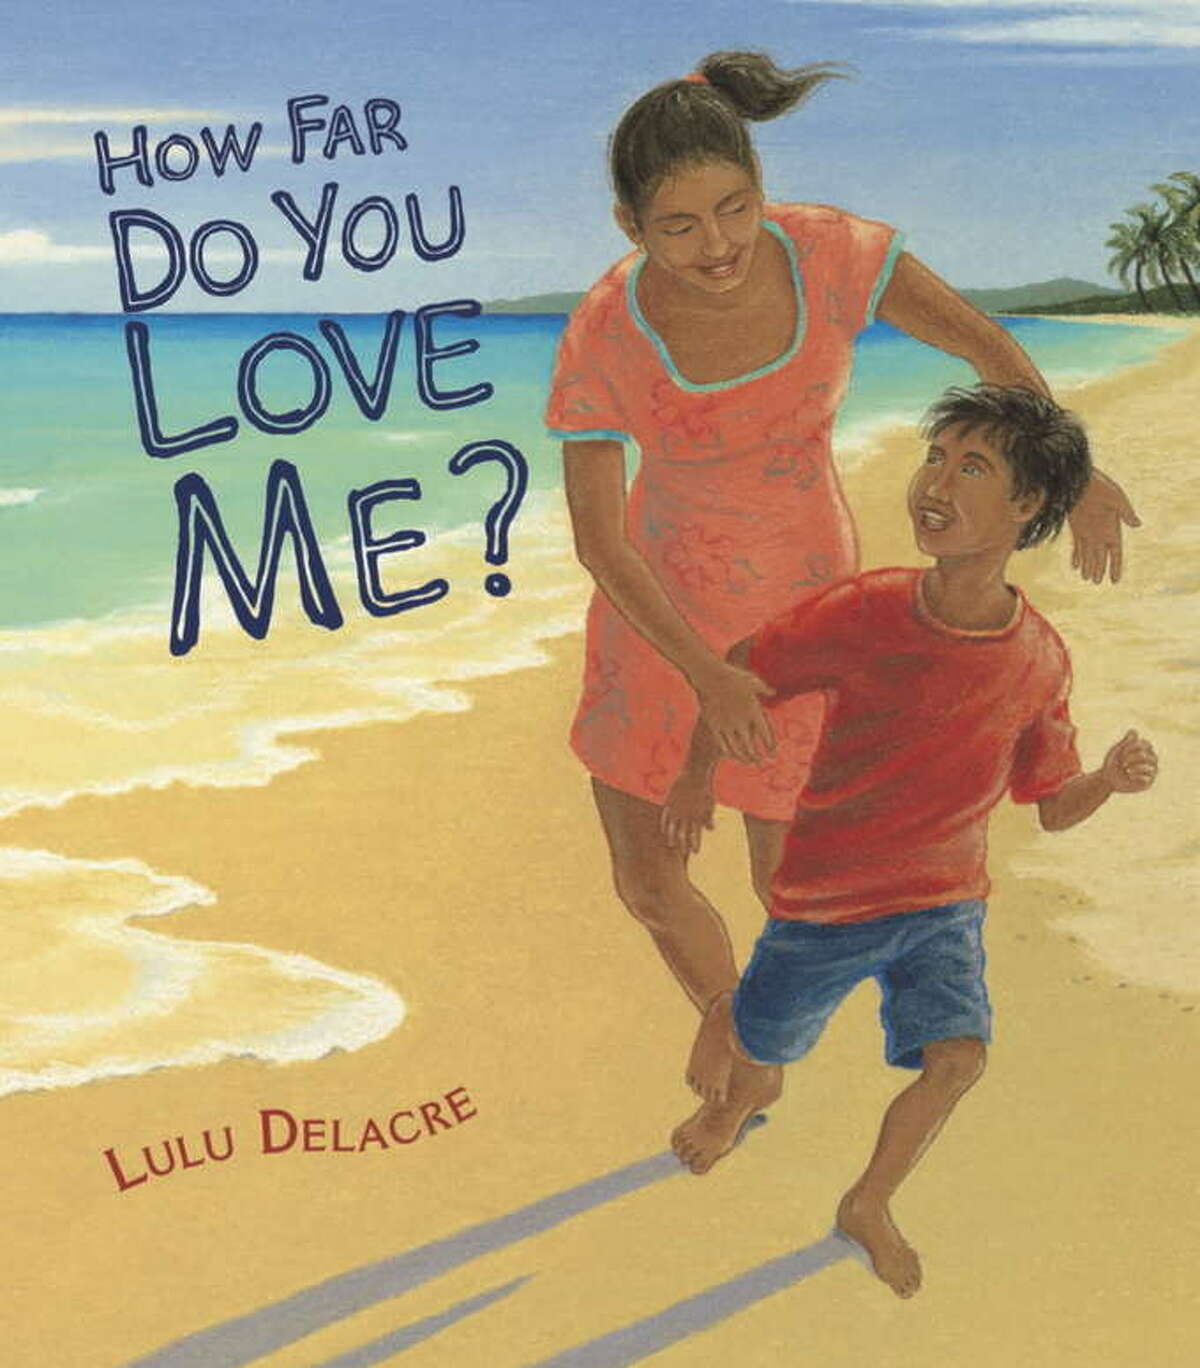 Lulu Delacre's "How Far Do You Love Me?"